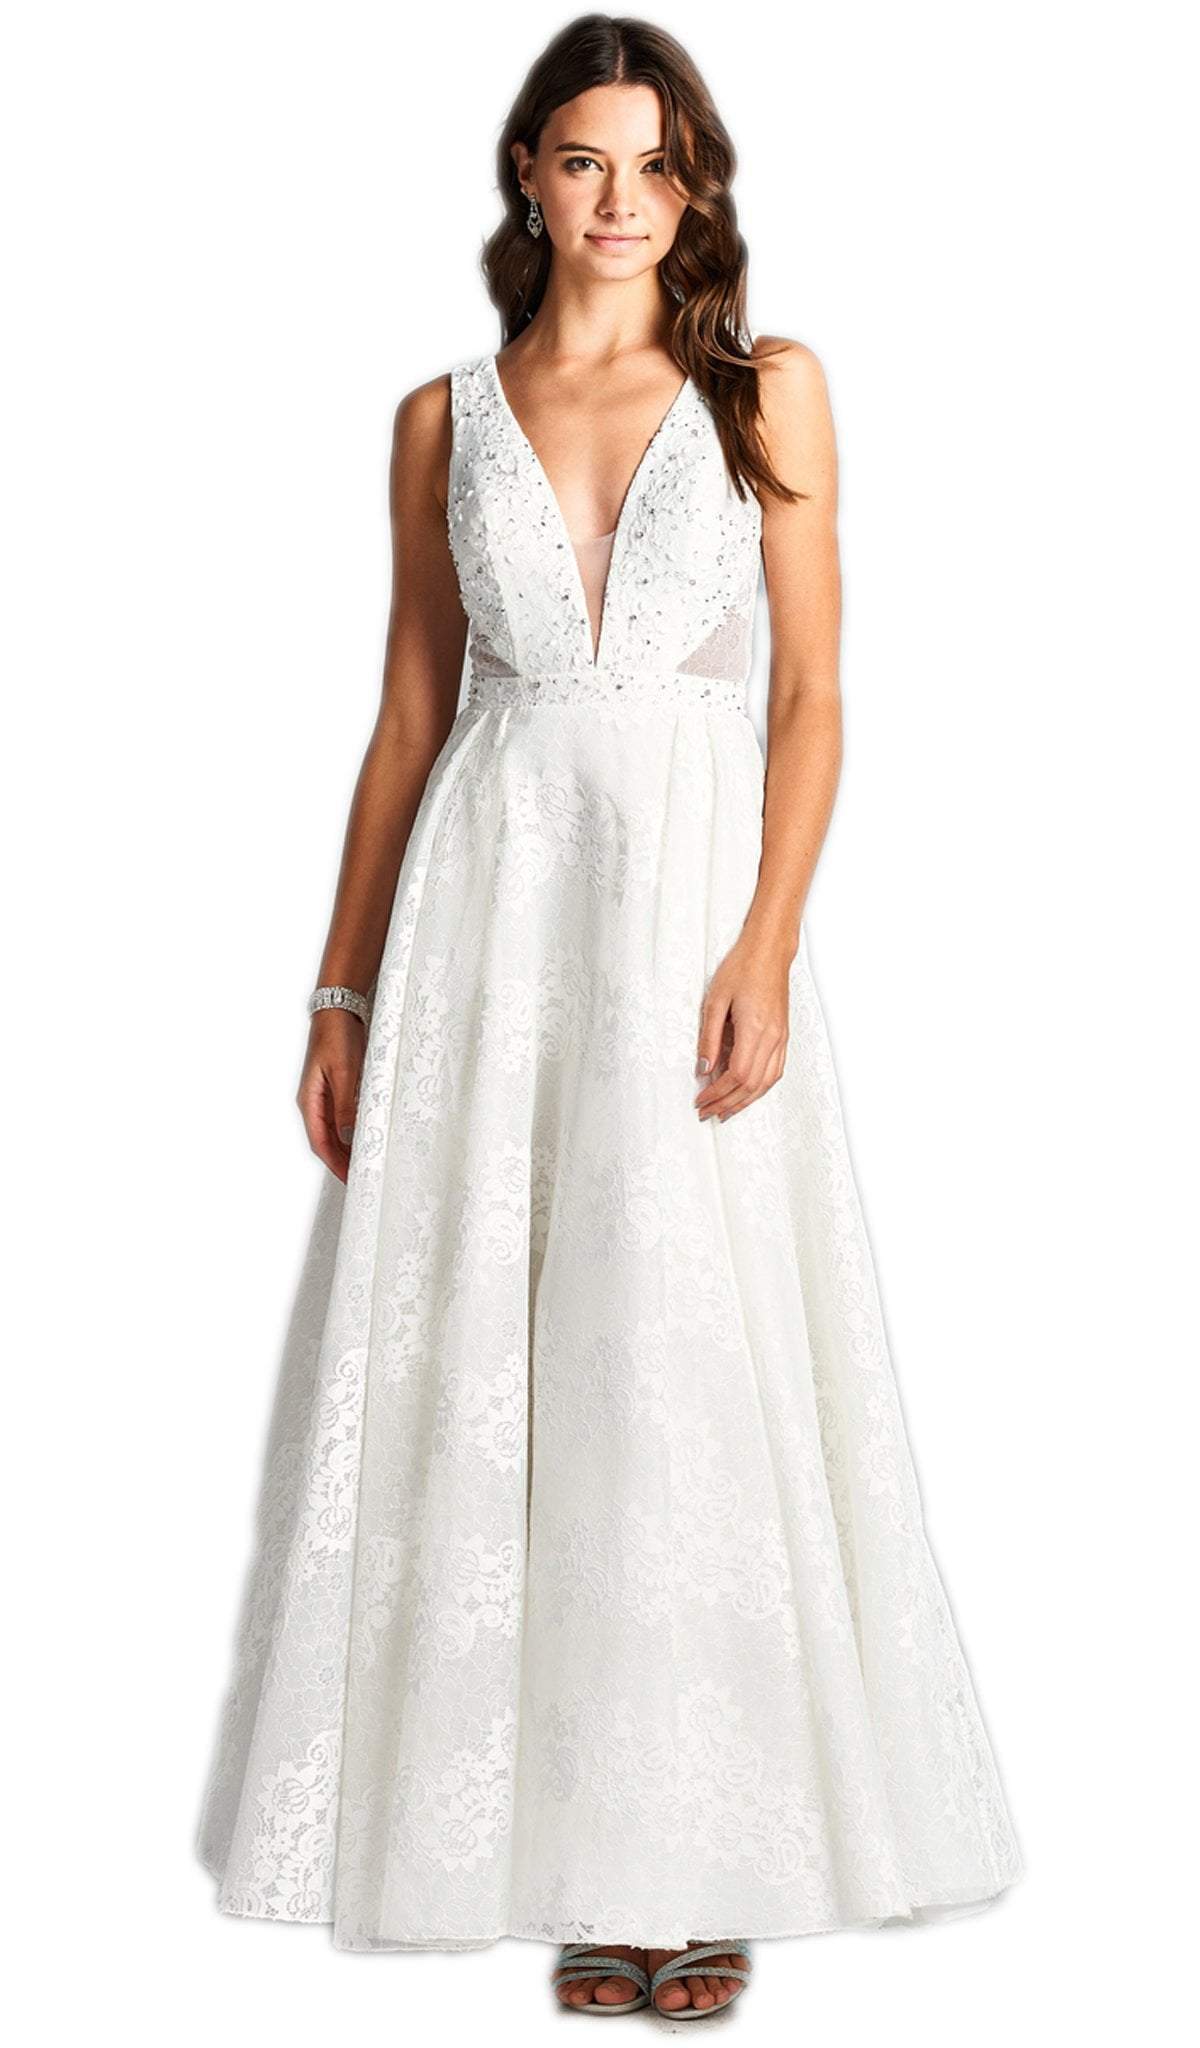 Aspeed Design - Floral Lace Applique Wedding Dress
